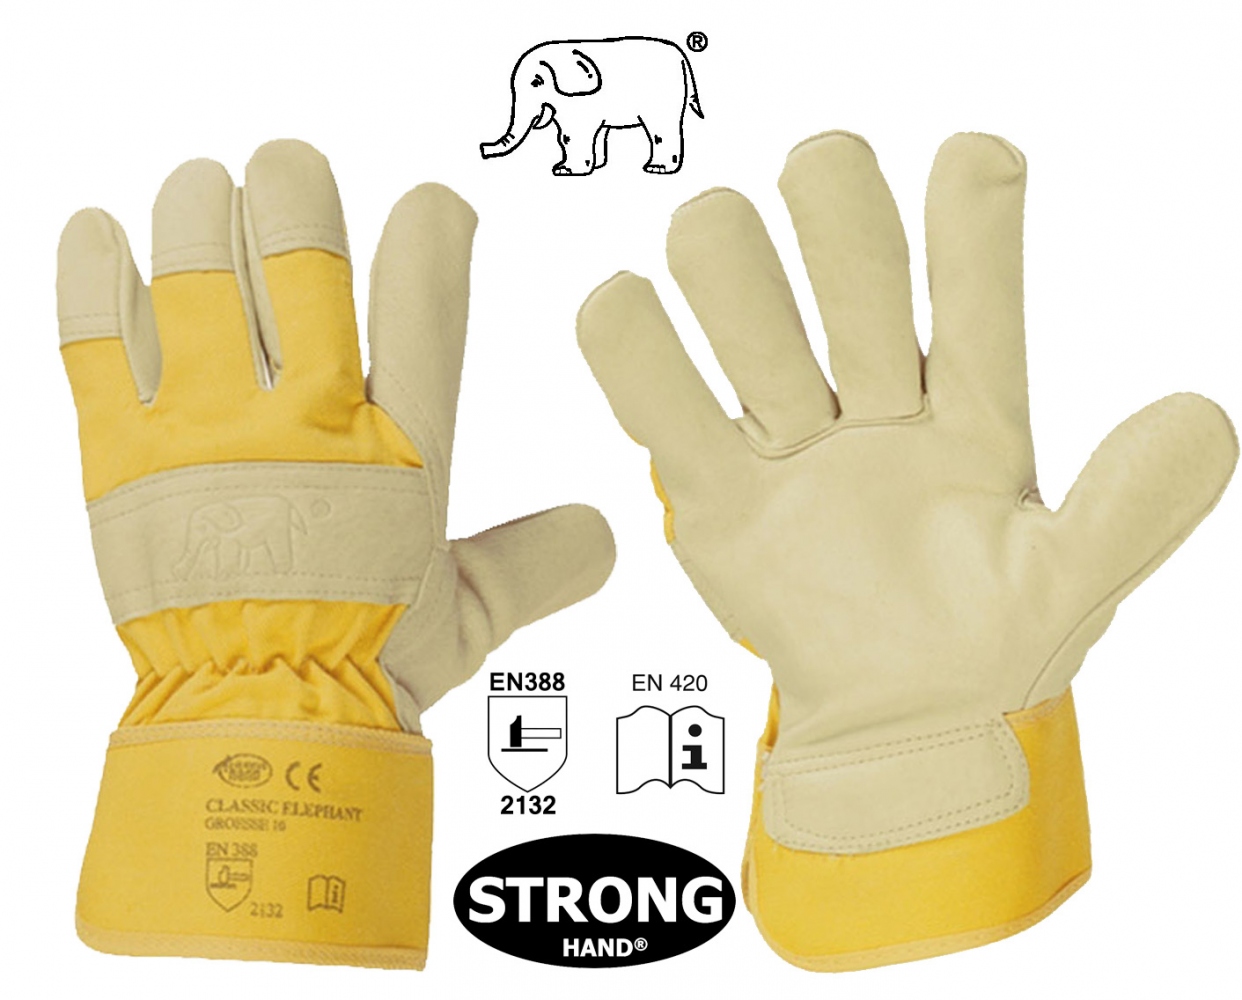 pics/Feldtmann 2016/Handschutz/stronghand-0179-elephant-leather-safety-gloves.jpg